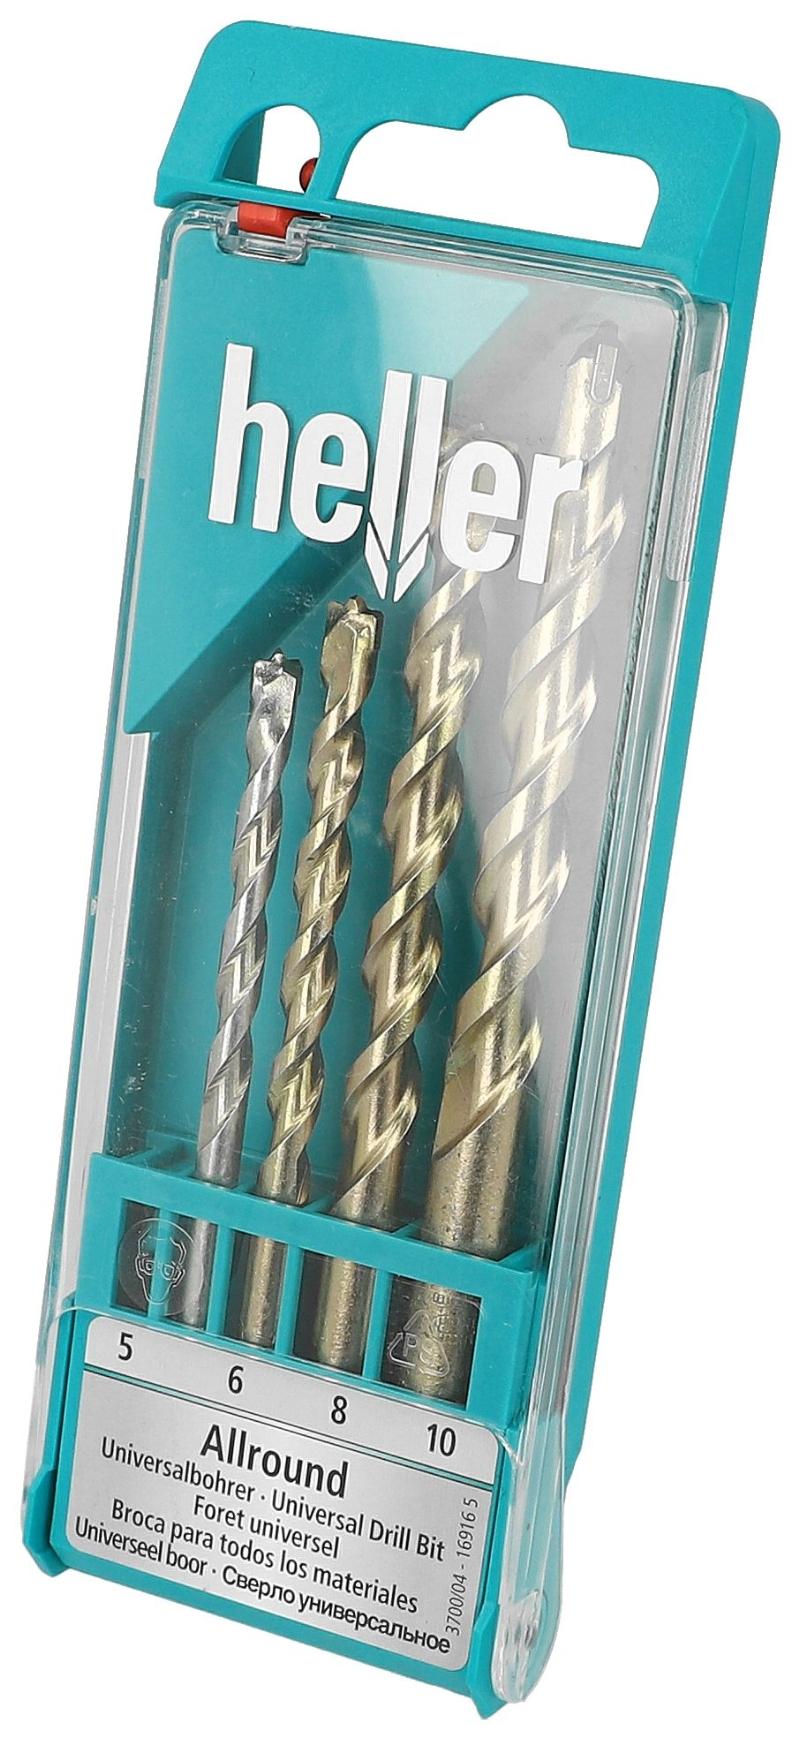 Heller Unibor Cordless set 5,6,8,10mm